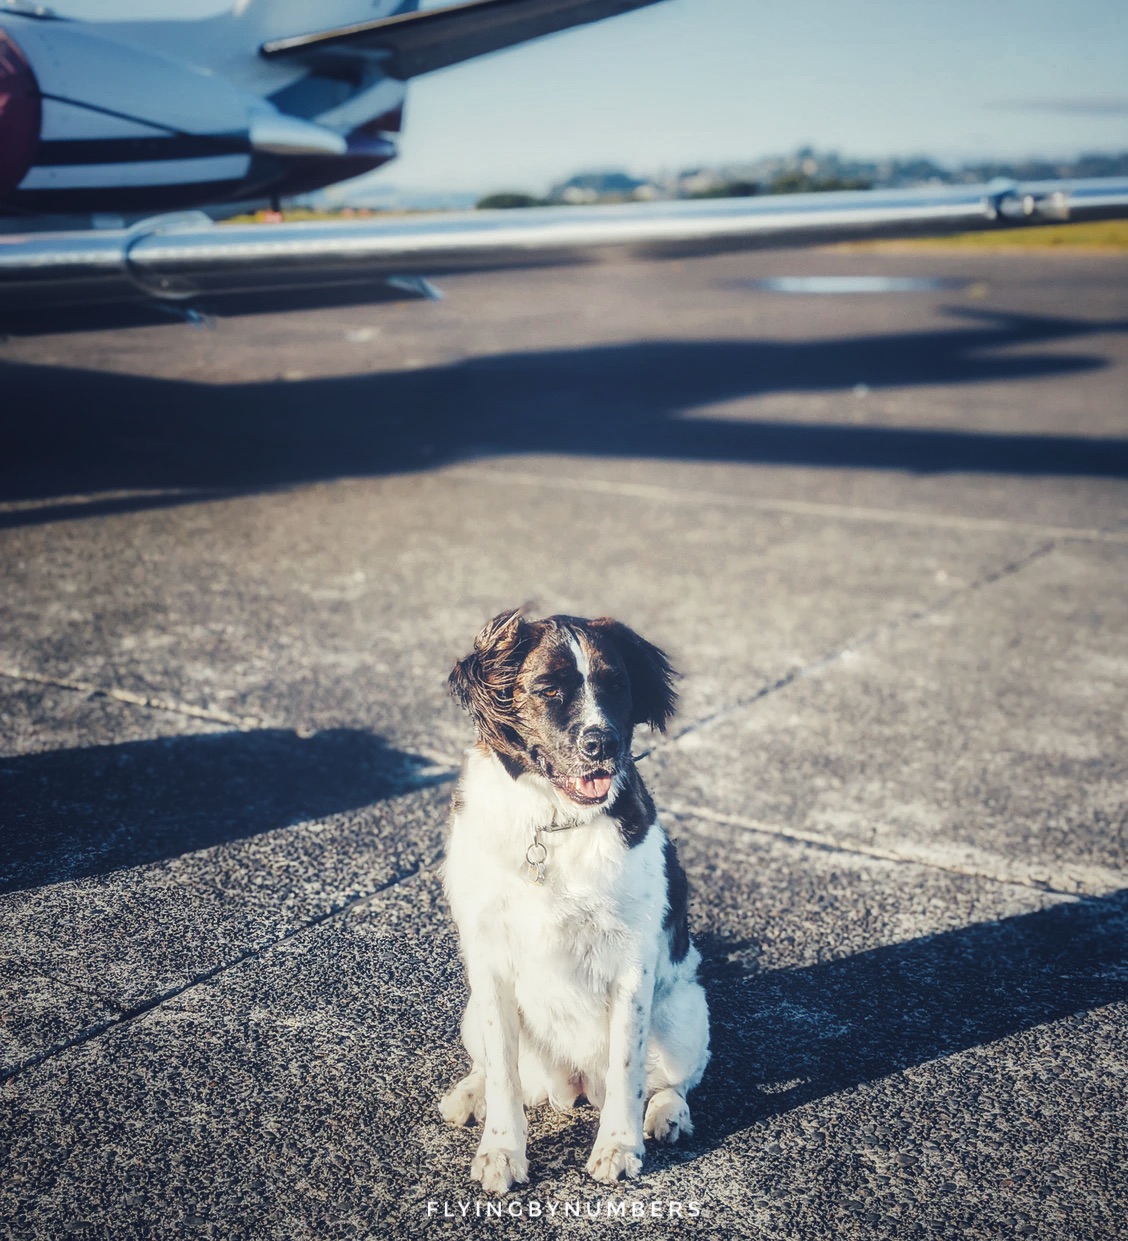 Dog sitting next to jet aircraft